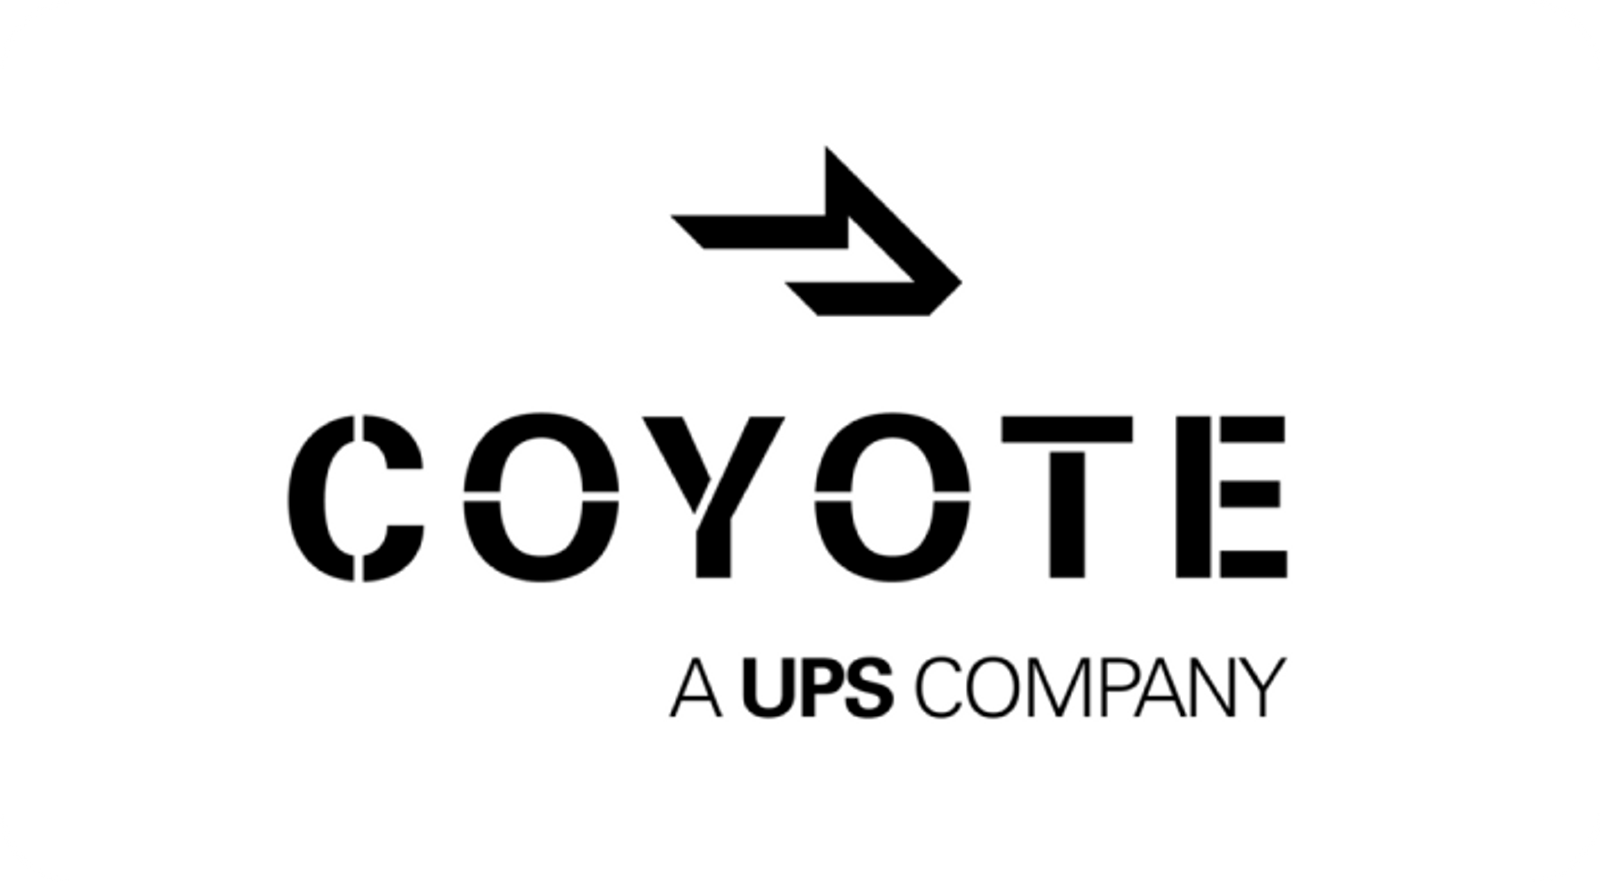 Coyote (A UPS Company) logo